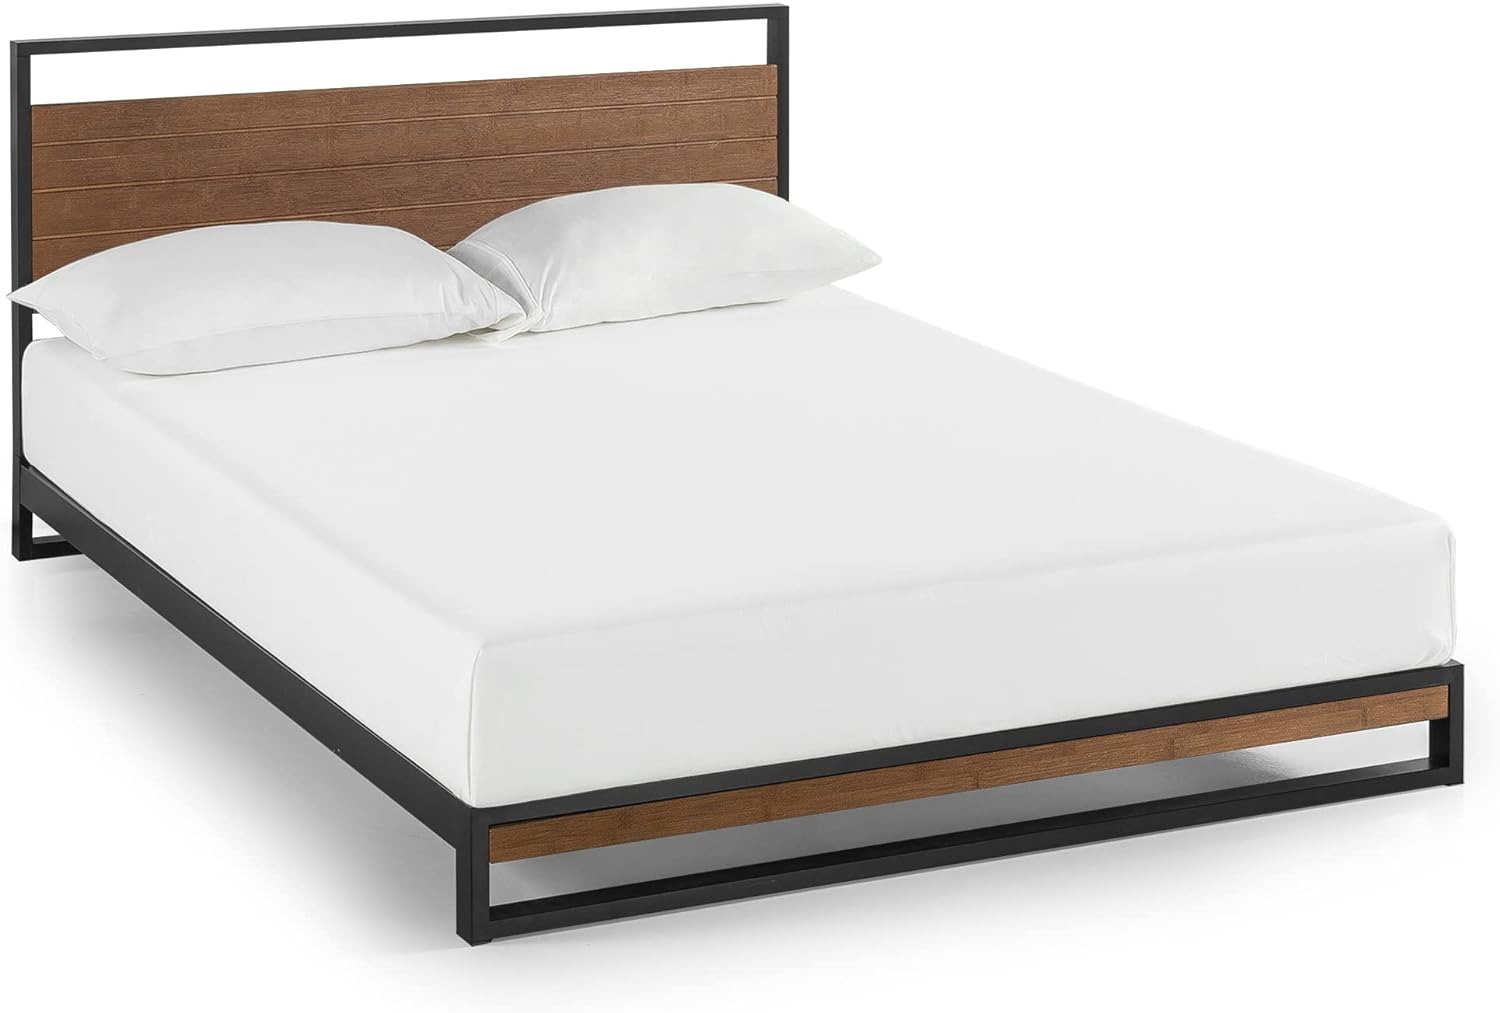 Zinus Suzanne Metal and Wood Platform Bed